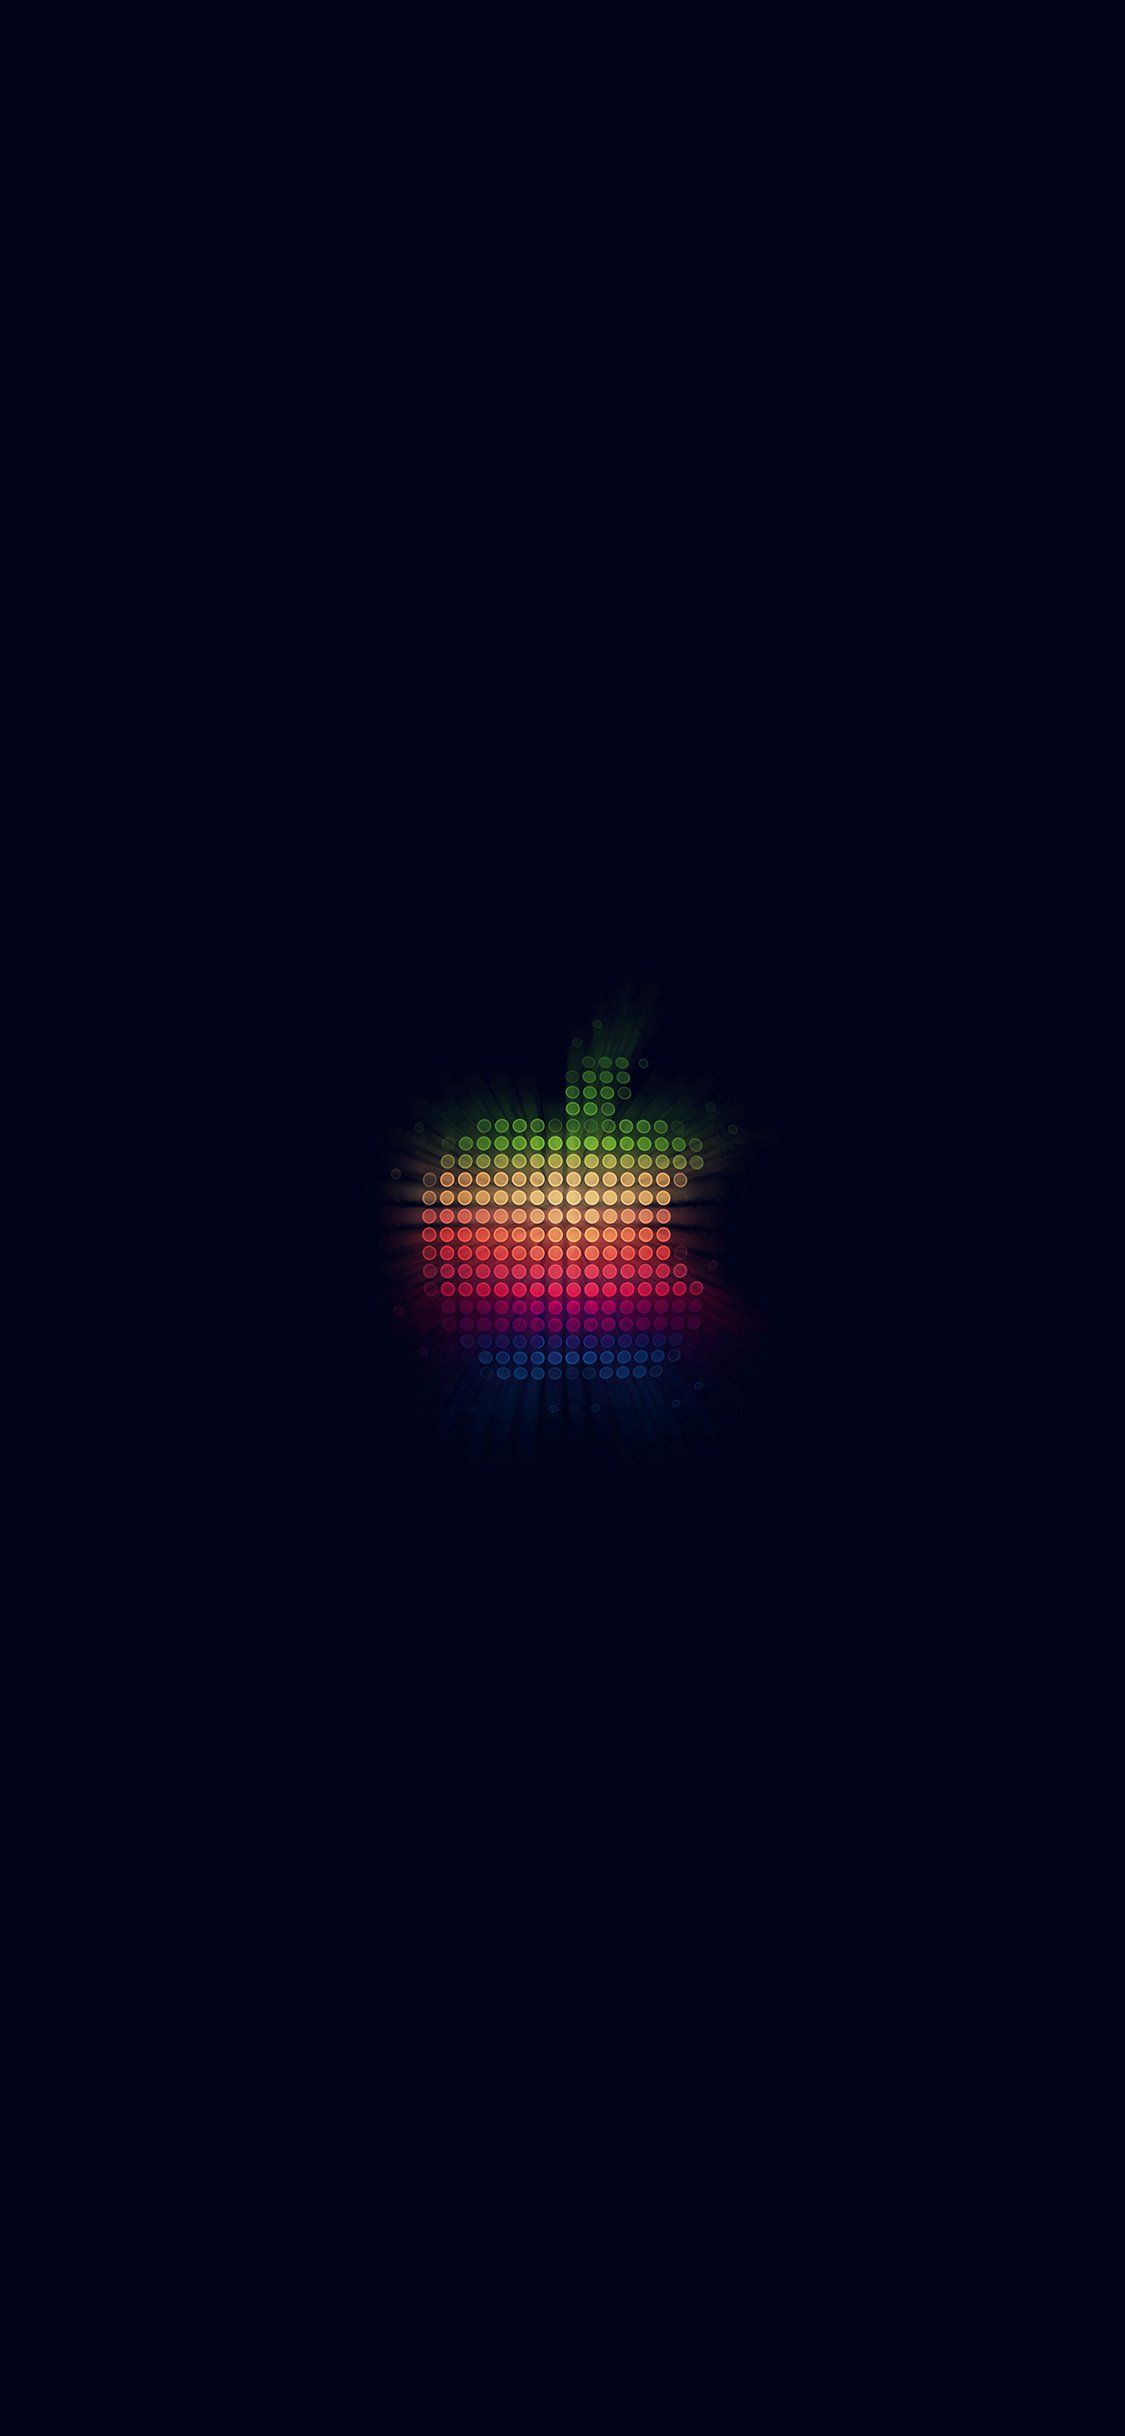 Rainbow Apple Logo Wallpapers - Top Free Rainbow Apple Logo Backgrounds ...